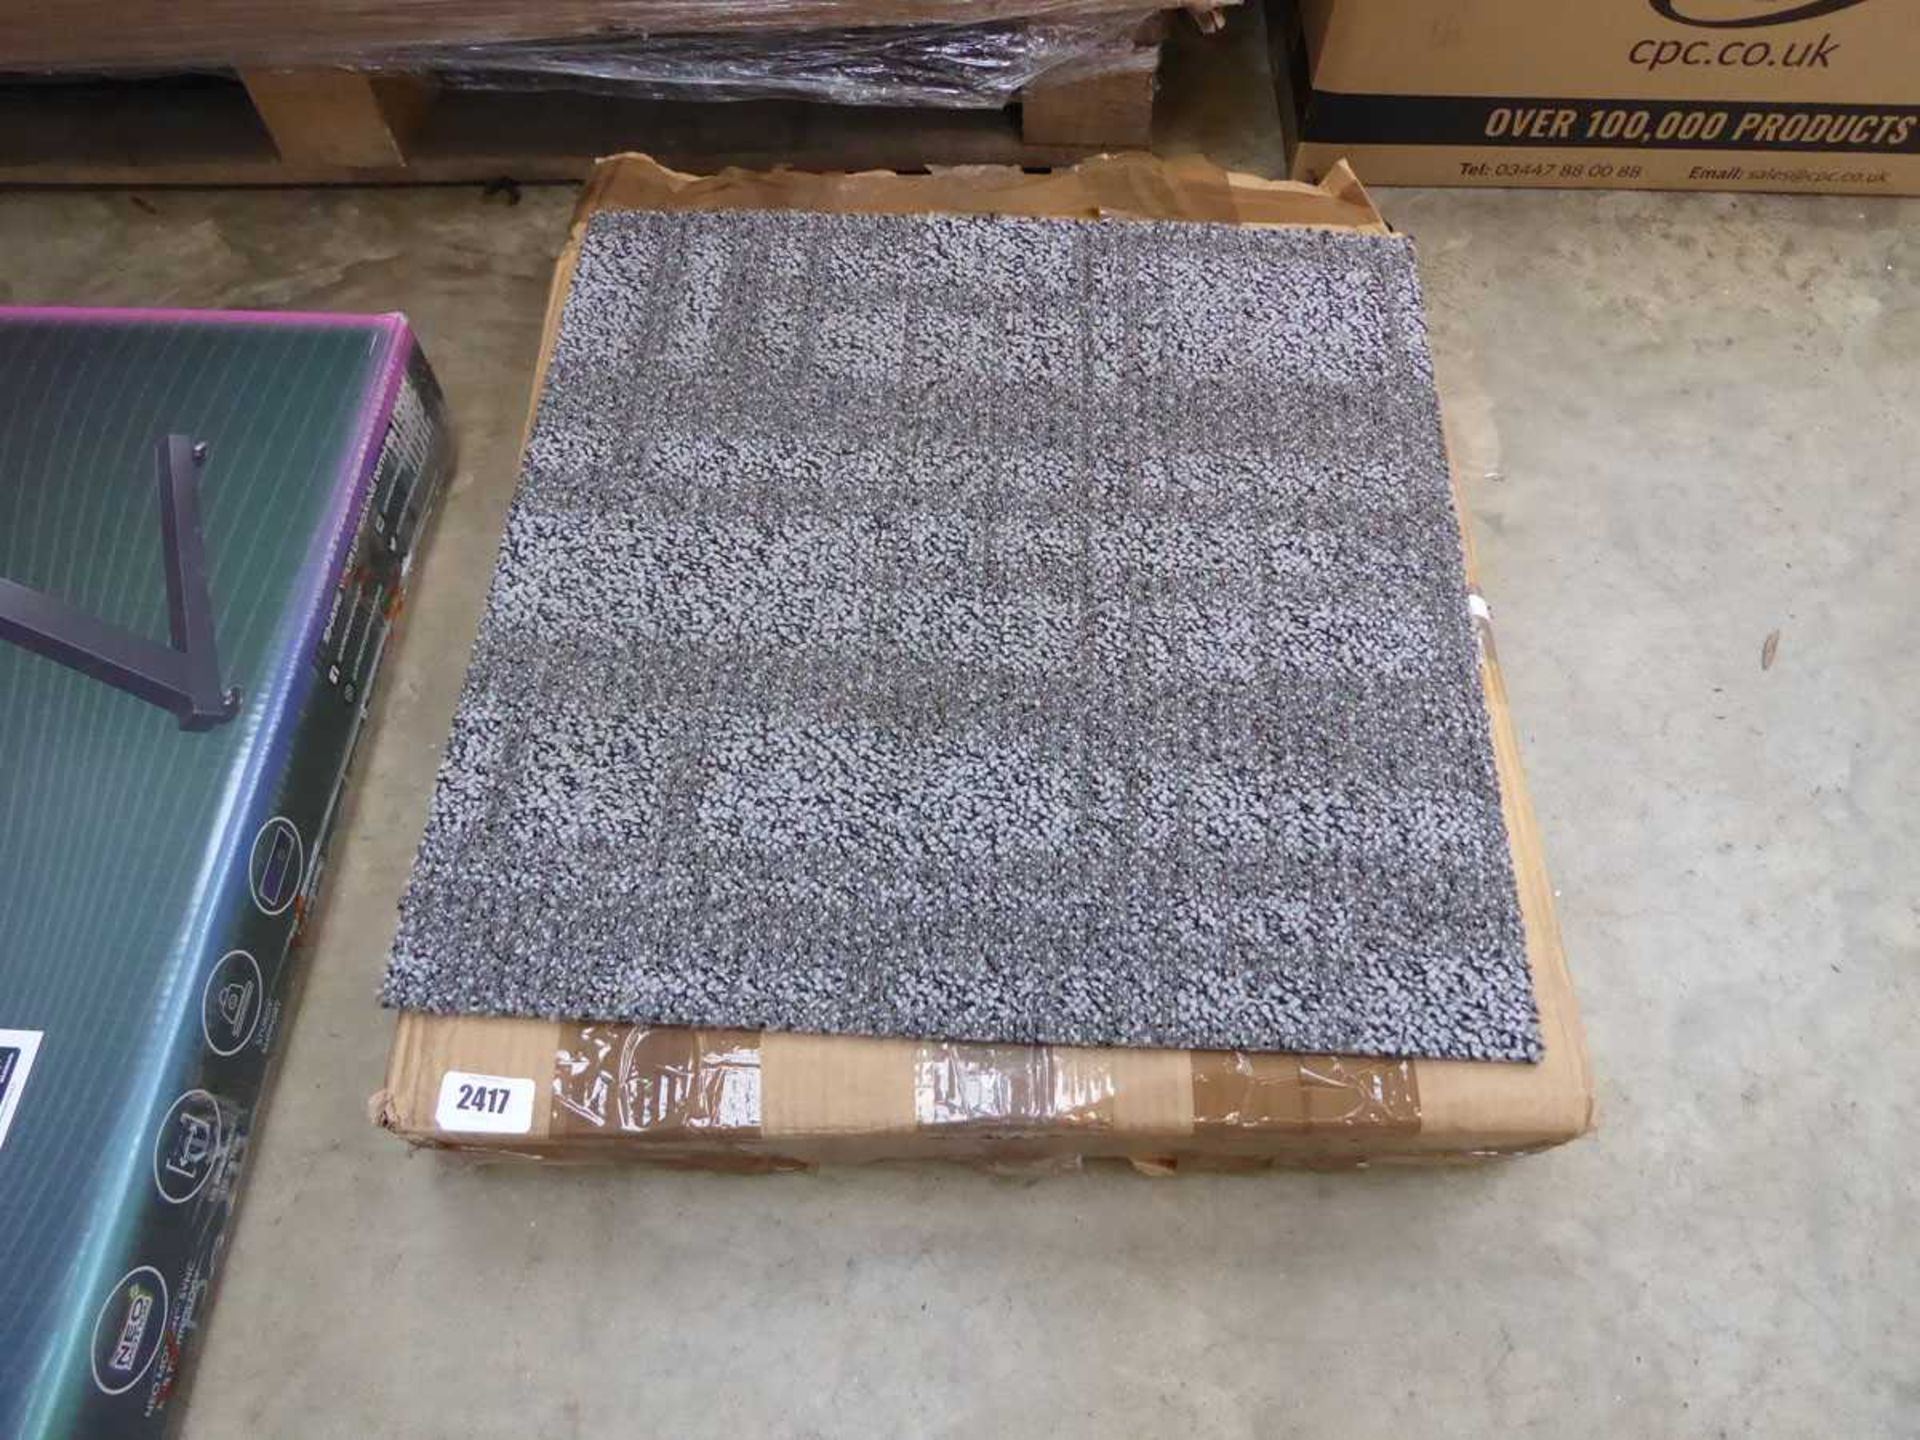 Box containing large quantity of grey carpet tiles